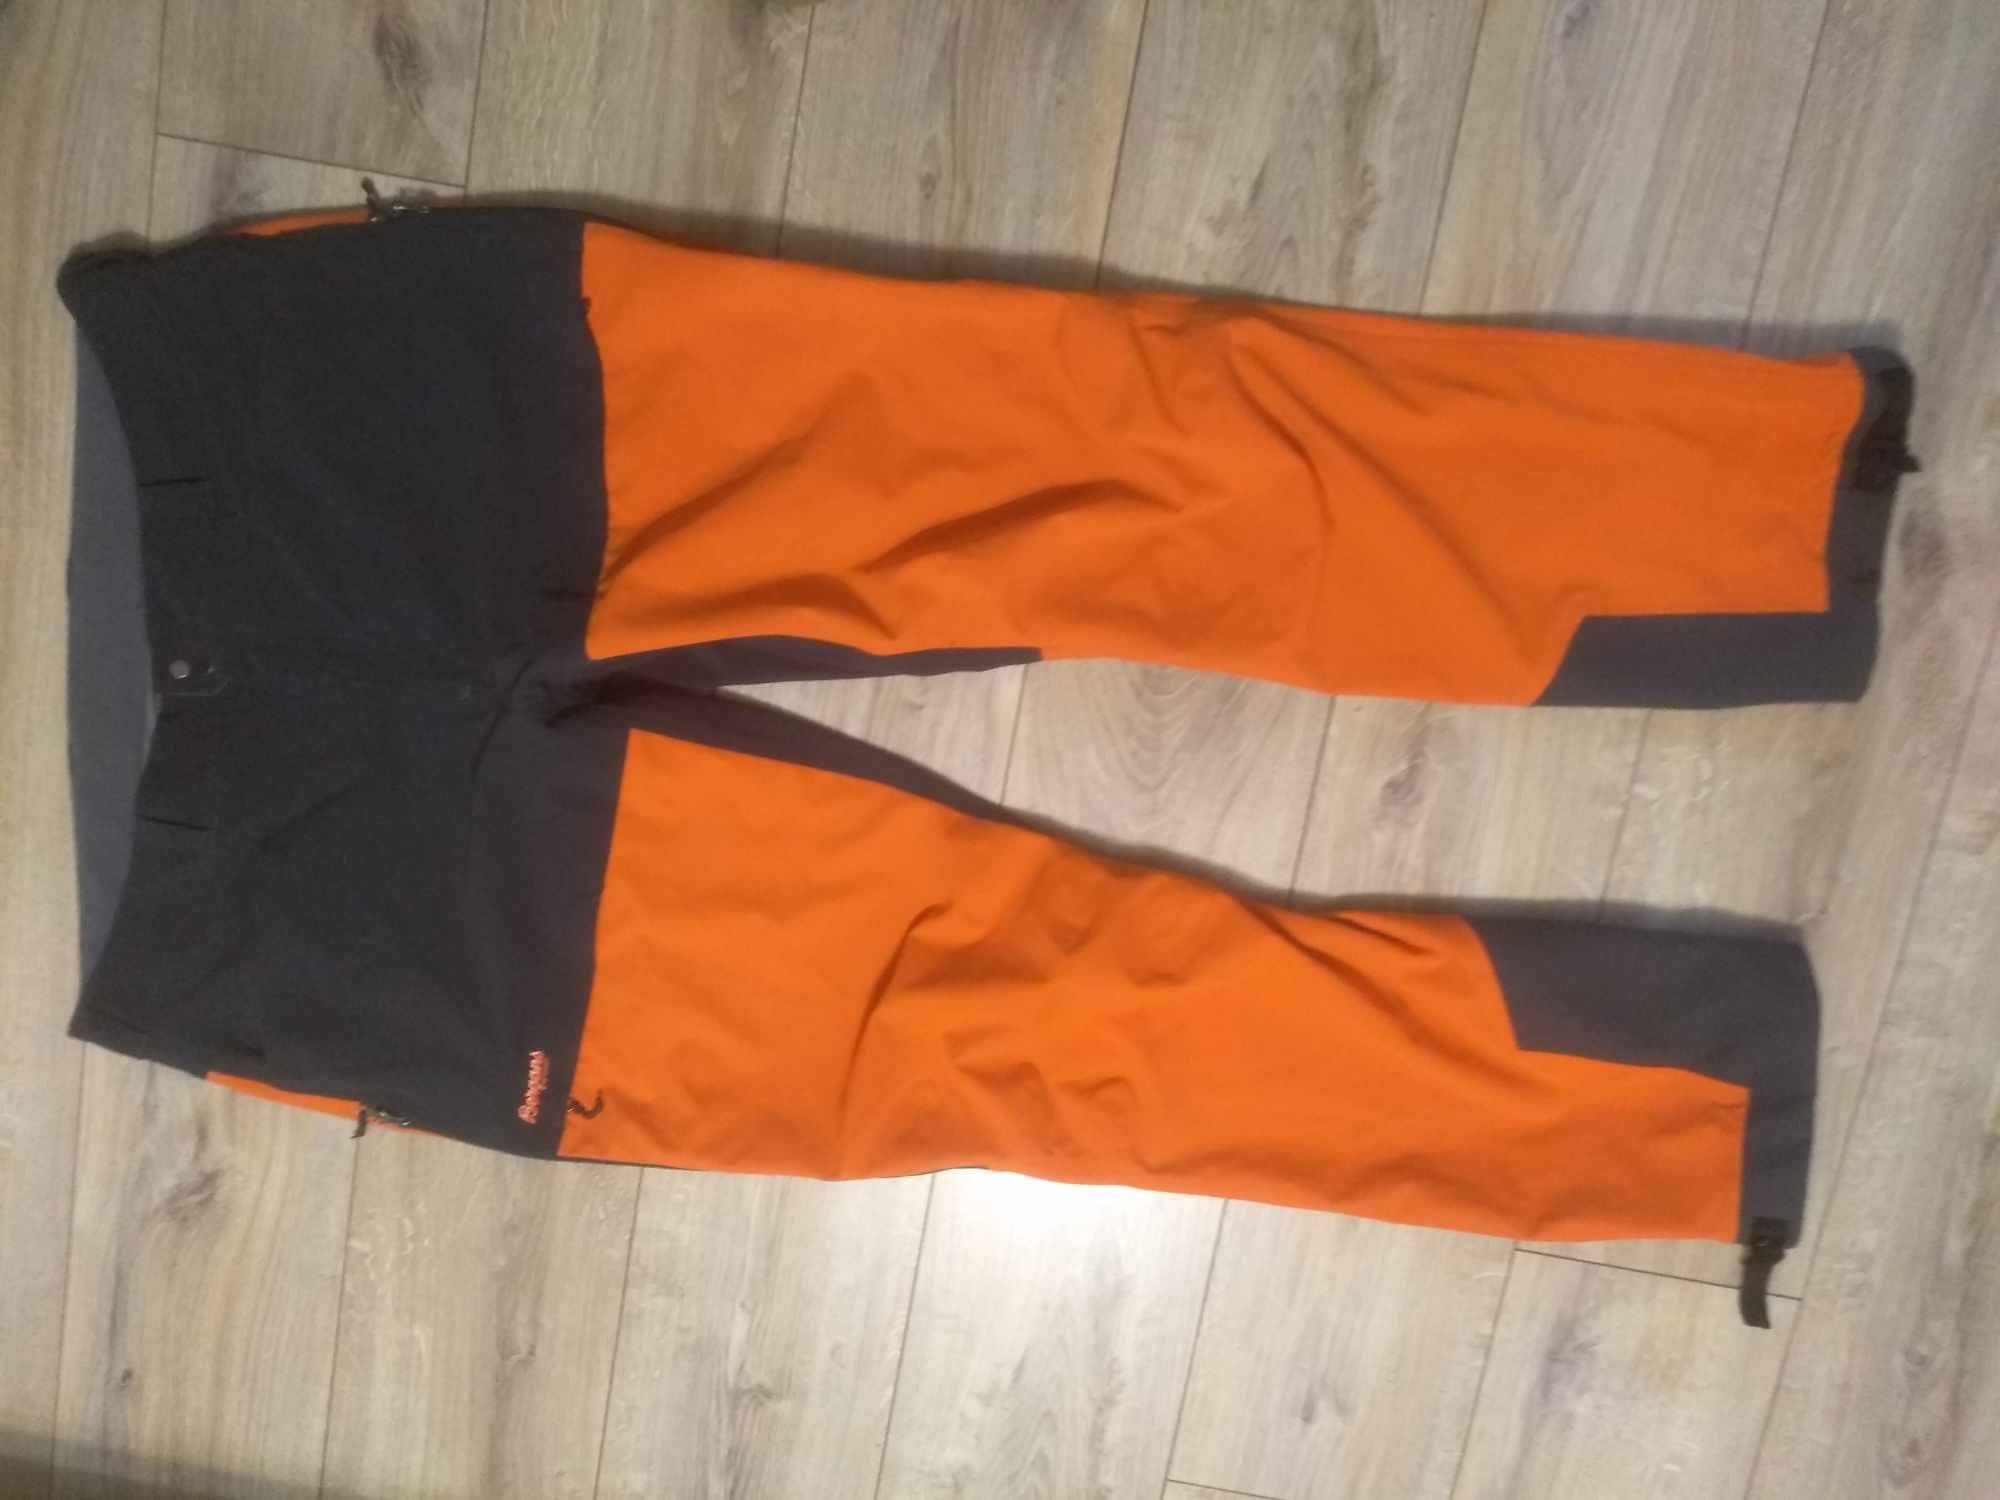 Bergans Bekkely Hybrid Pants spodnie trekkingowe XXL